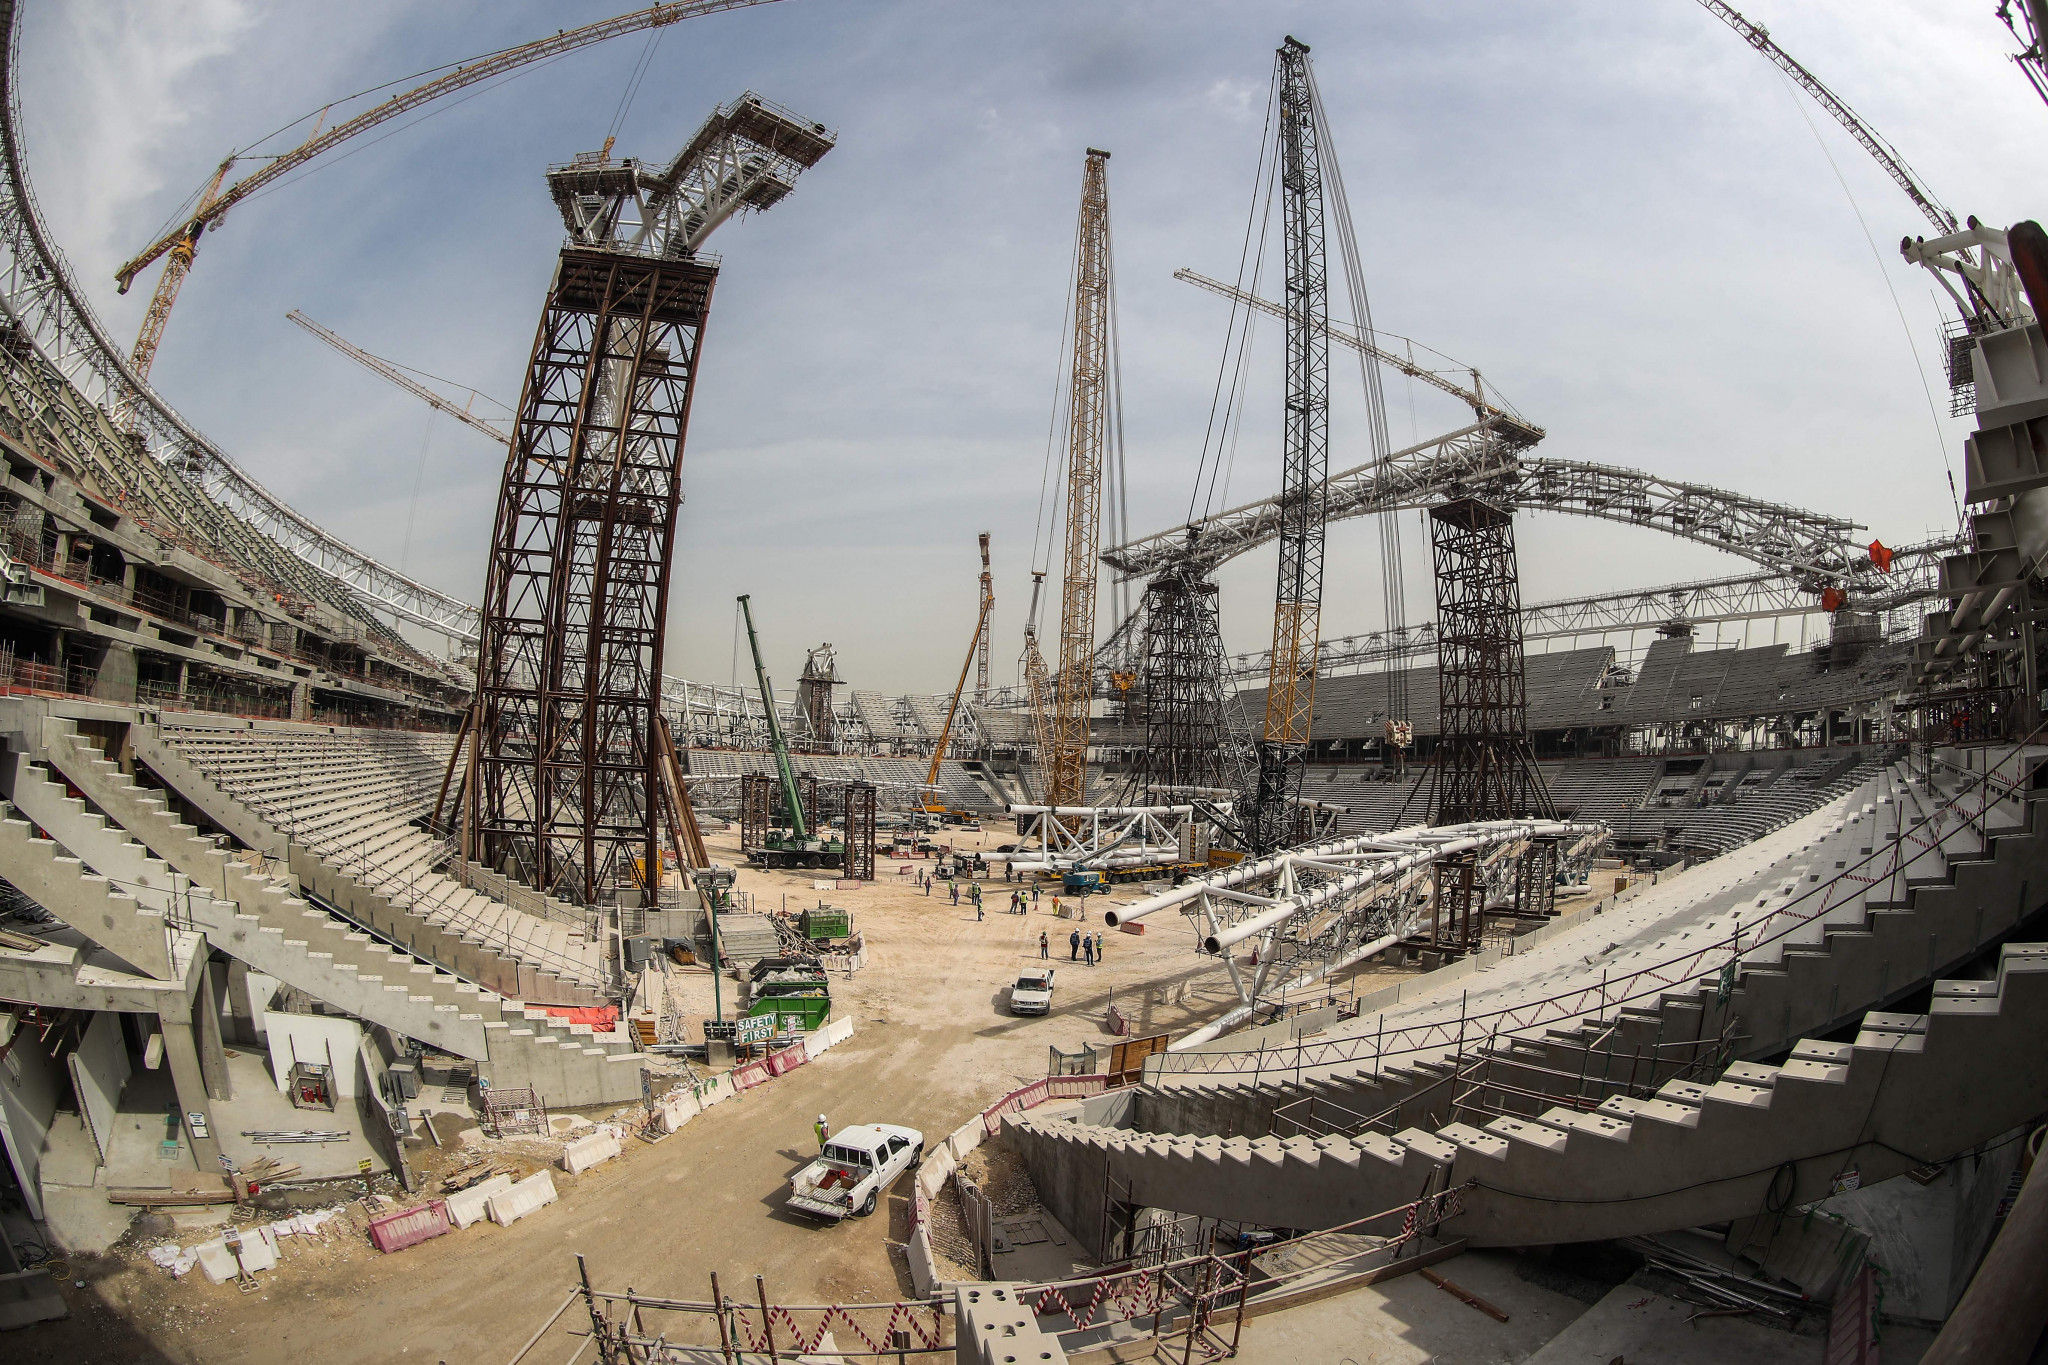 Qatar 2022 carbon footprint largely underestimated, study reveals